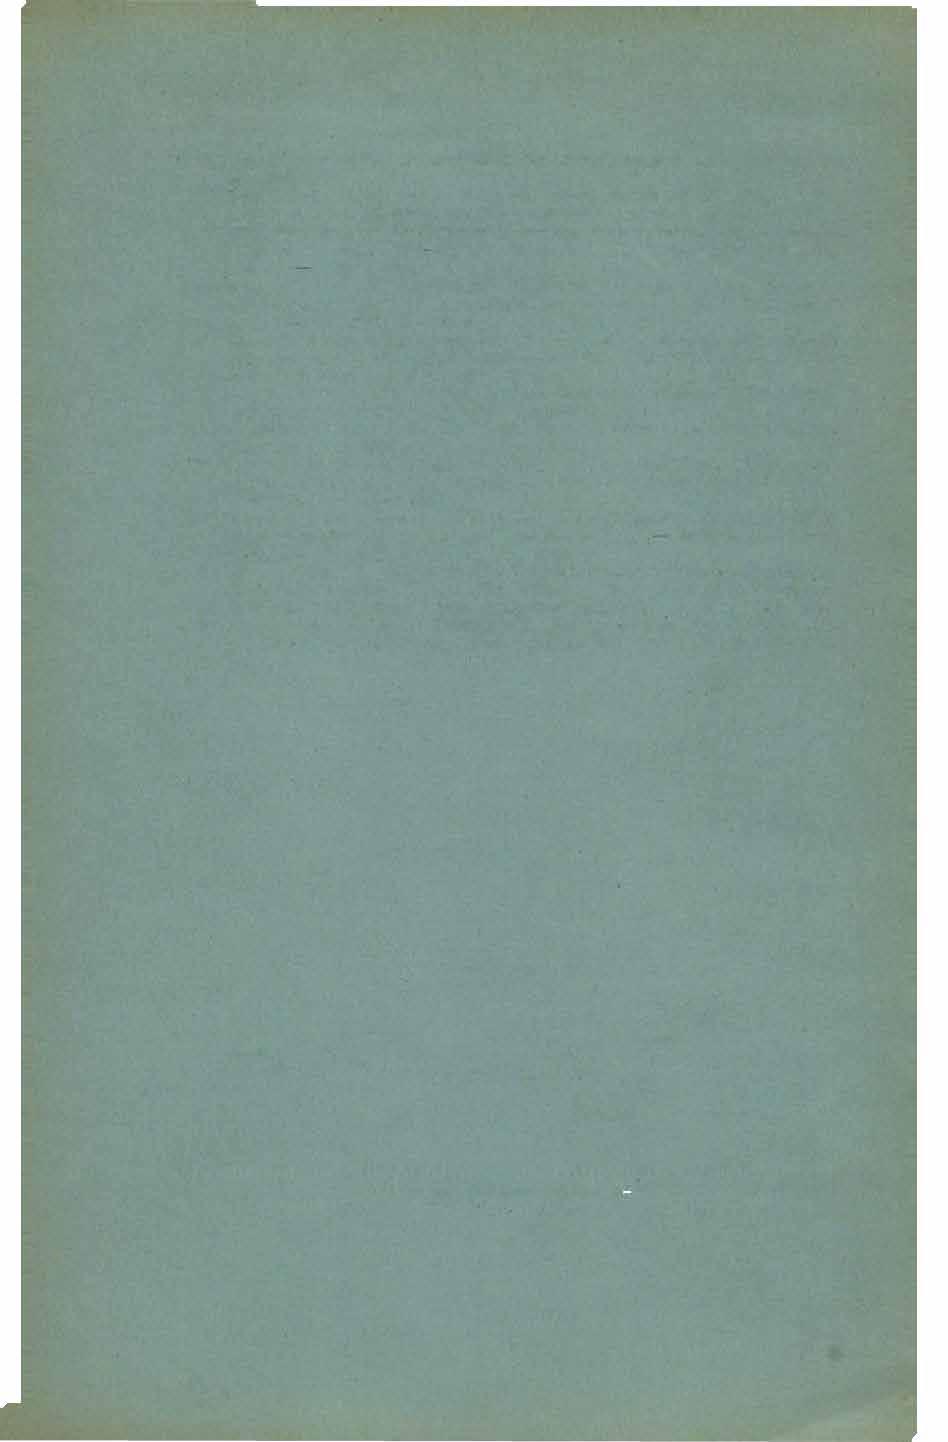 Nr.16. HøEG, OVE ÅRBO, Bliitcnbiologische Beobachtungen aus Spitzbergen. Oslo 1932. " 17. HøEG, OvE ÅRBO, Nates on Some Arctic Fossil Wood, With a Redescription of Cupressinoxylon Polyommatum, Cramer.